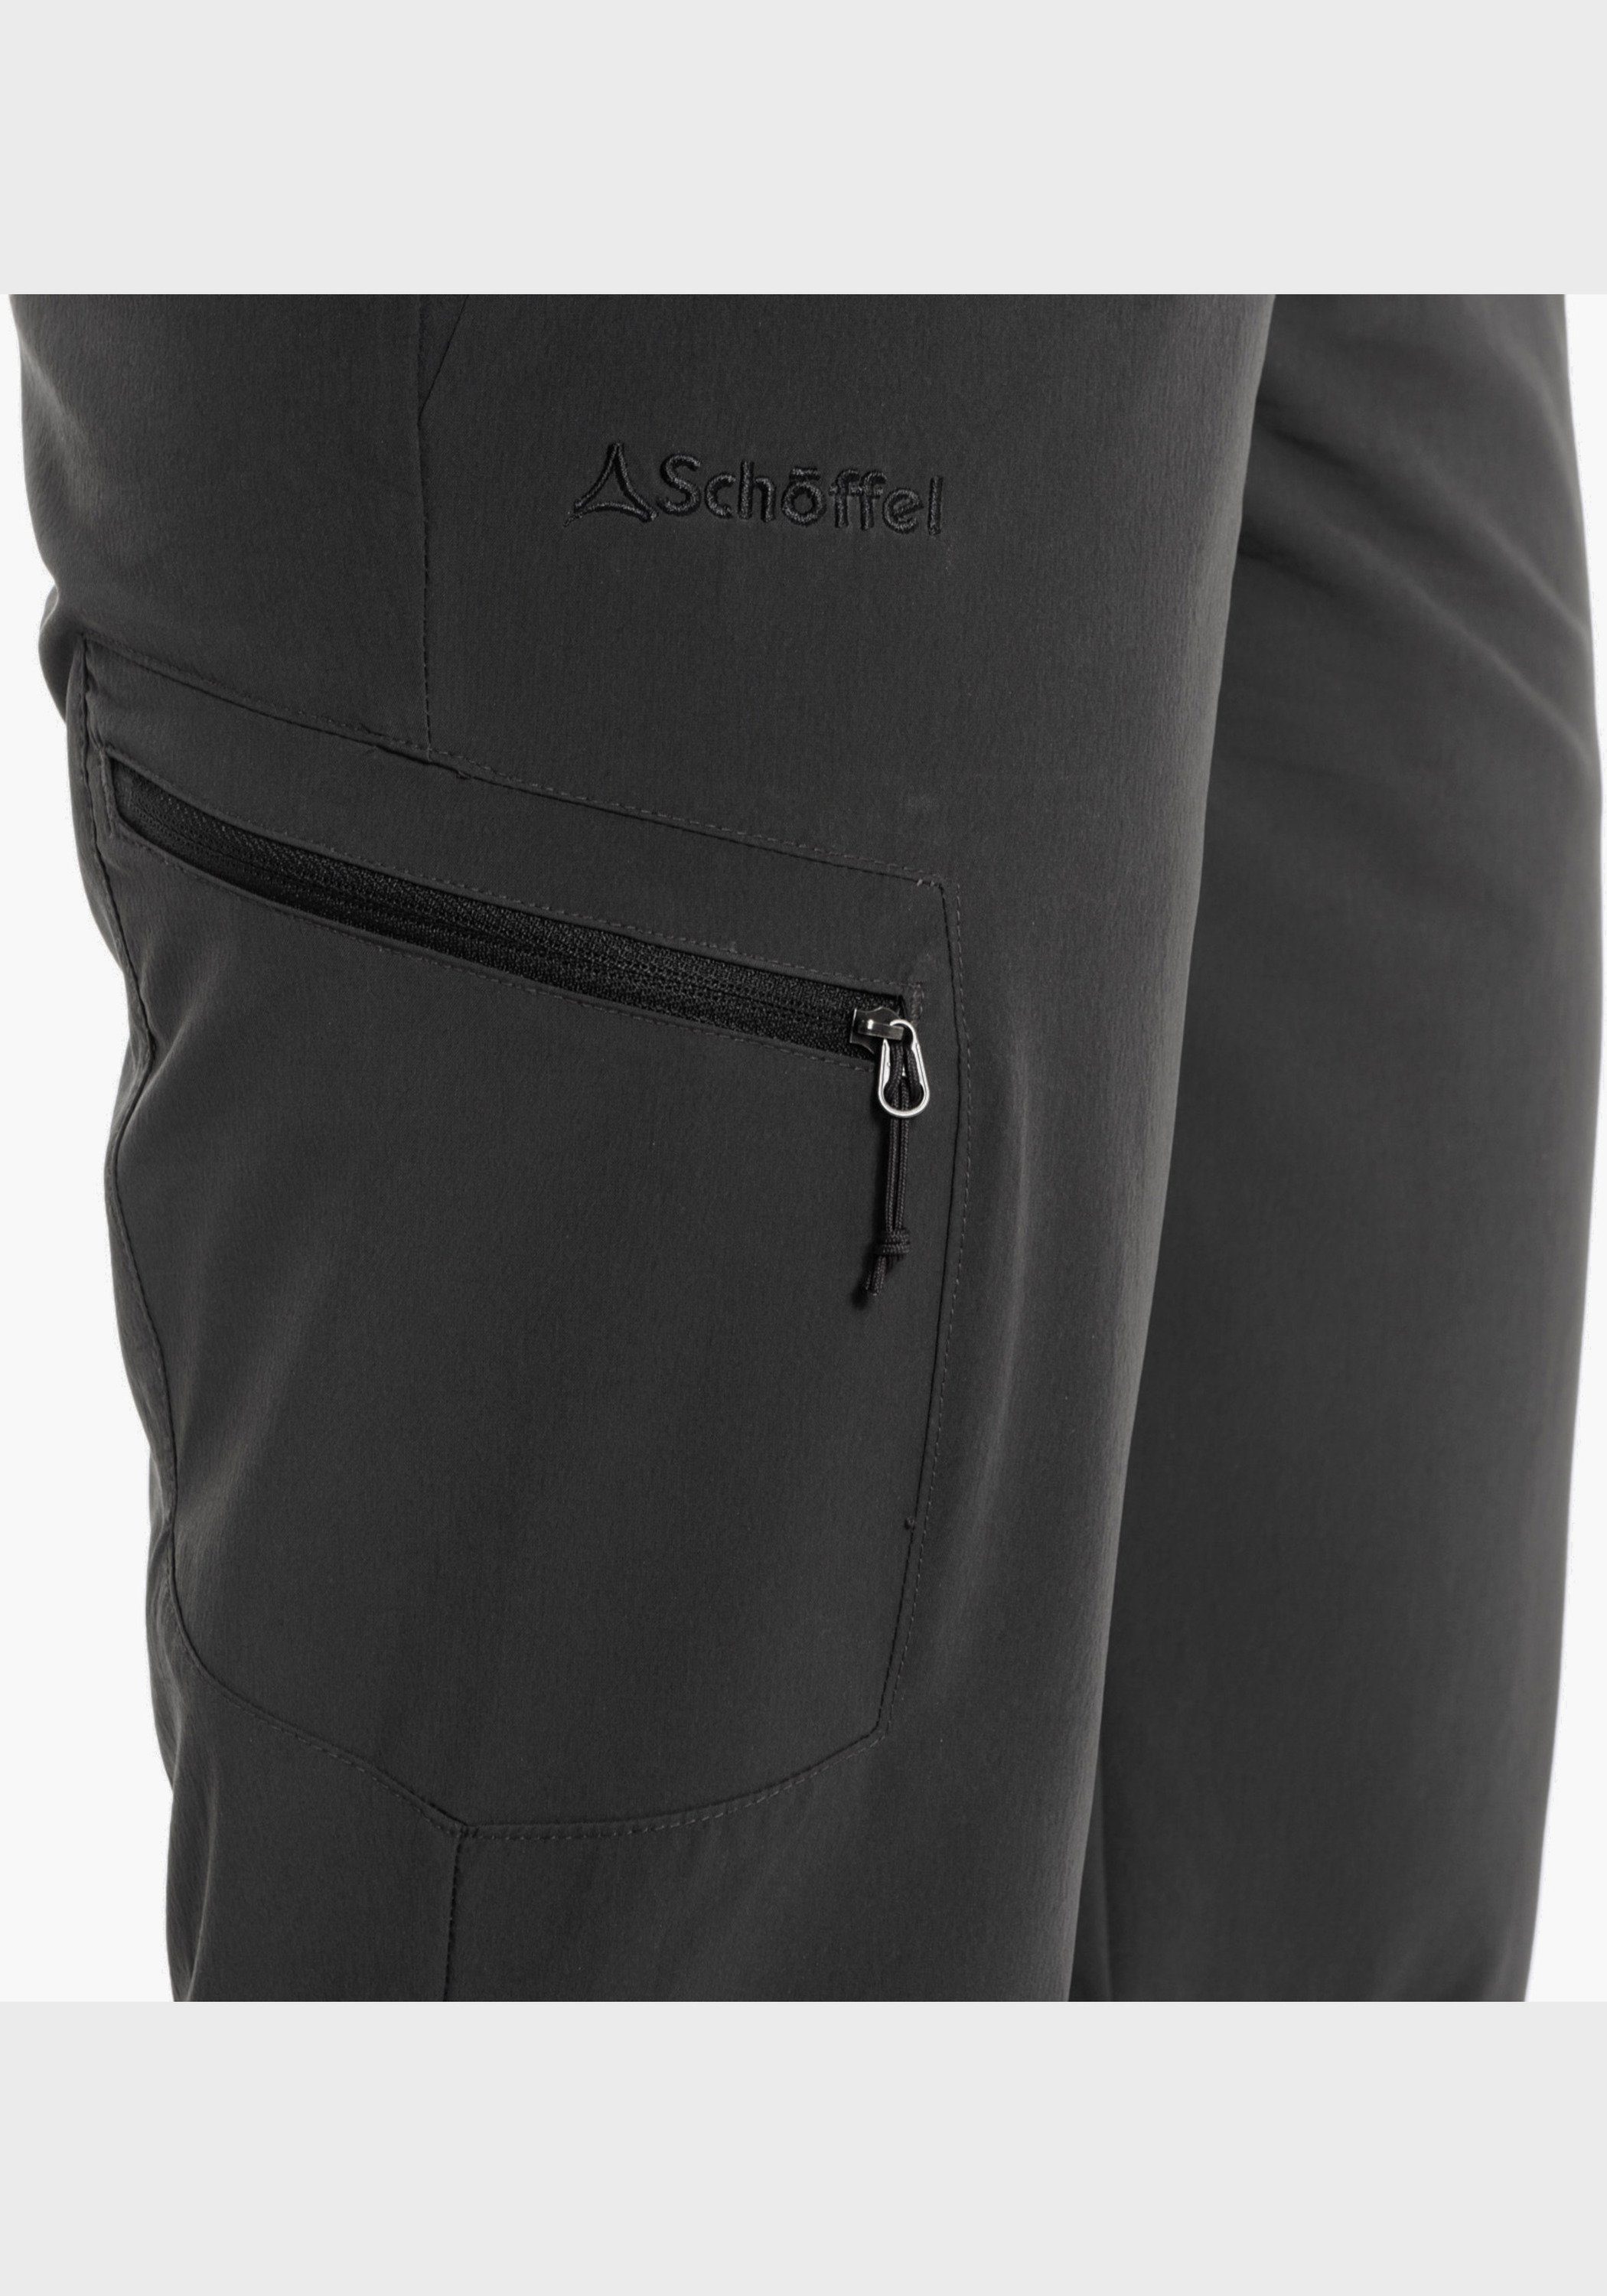 Ascona grau Schöffel Outdoorhose Pants